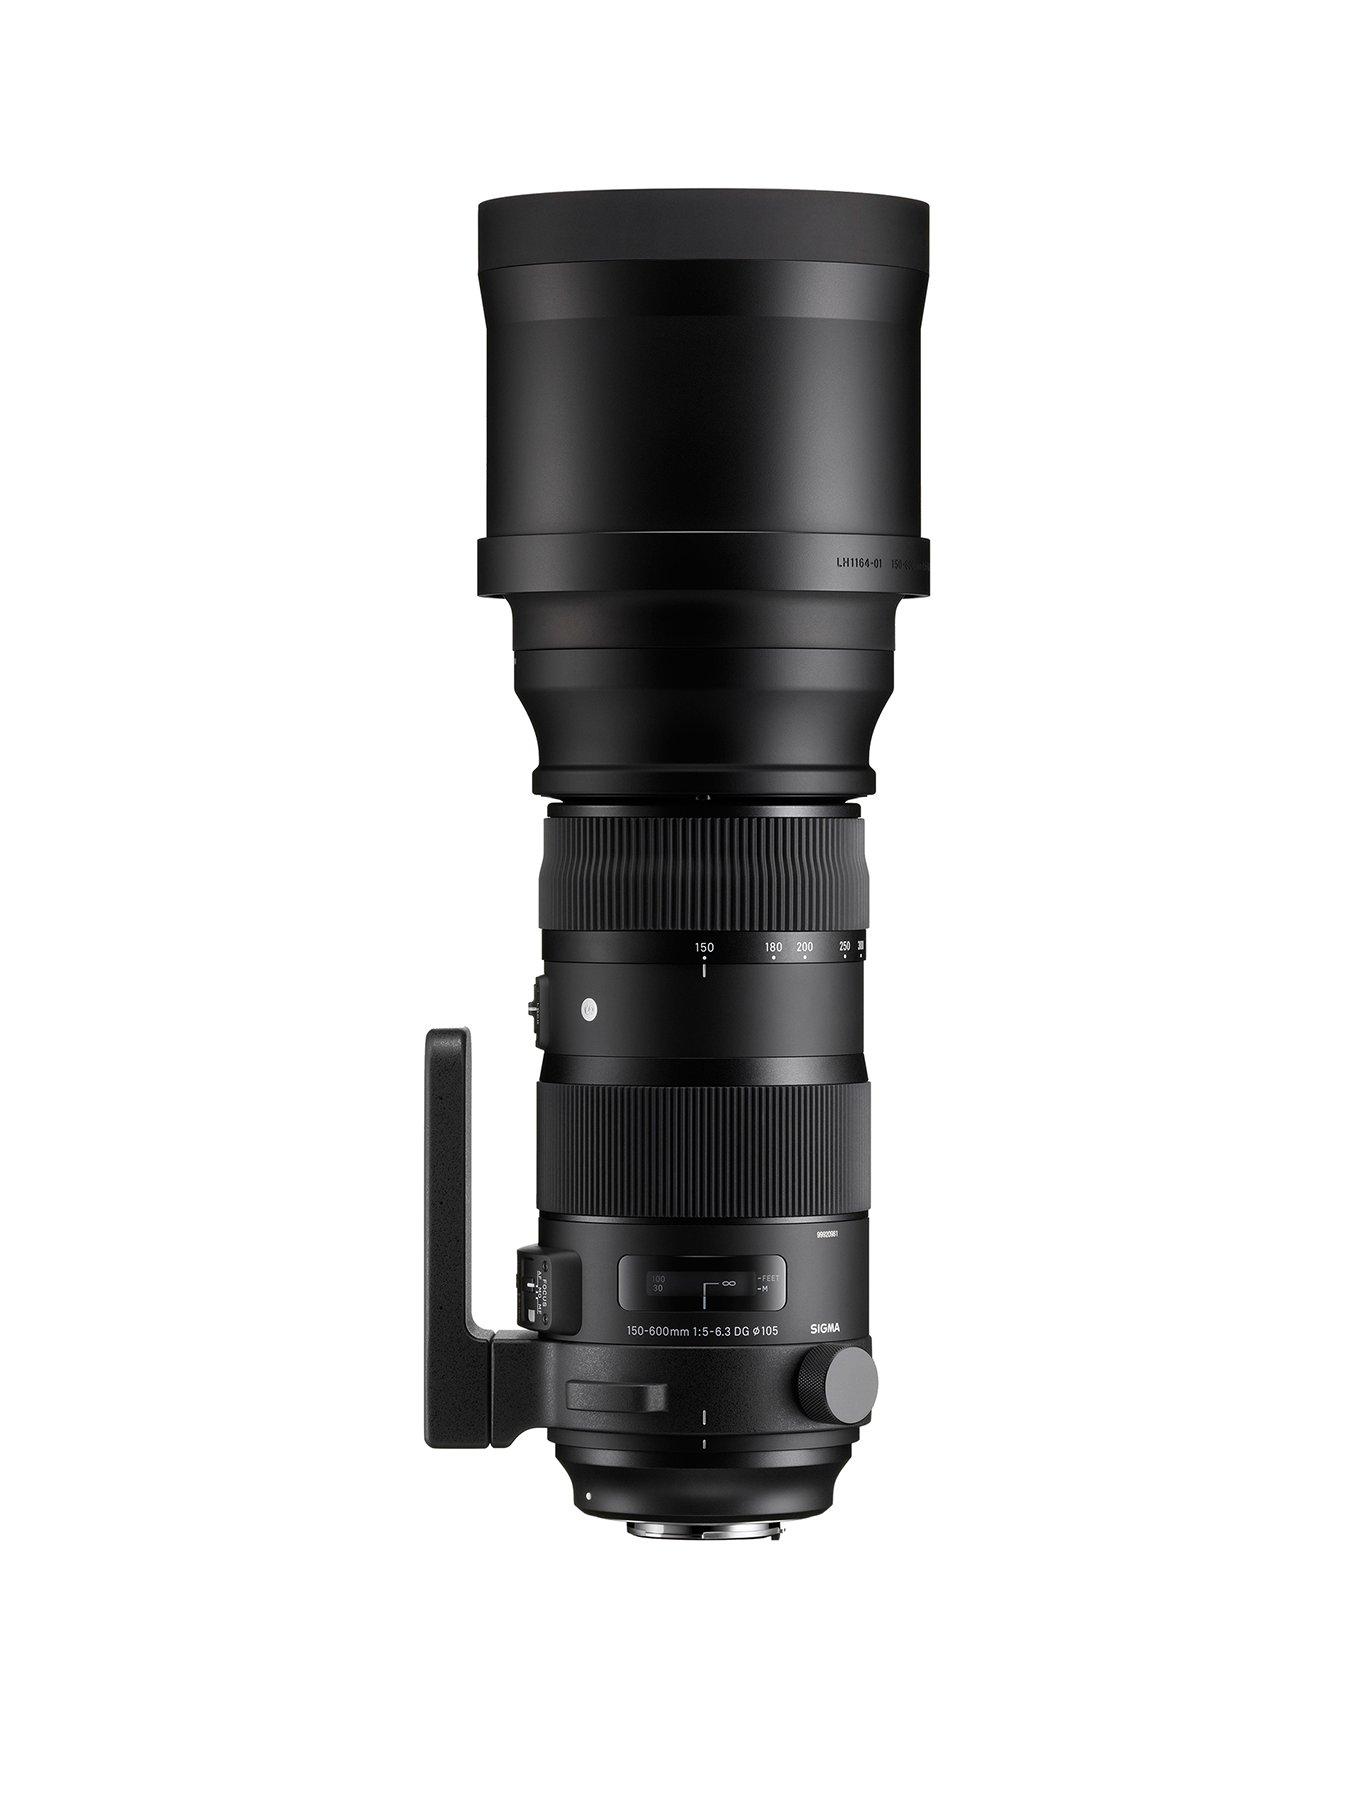 Sigma 150-600Mm F/5-6.3 Dg Os Hsm I S (Sport) Super Telephoto Lens – Nikon Fit